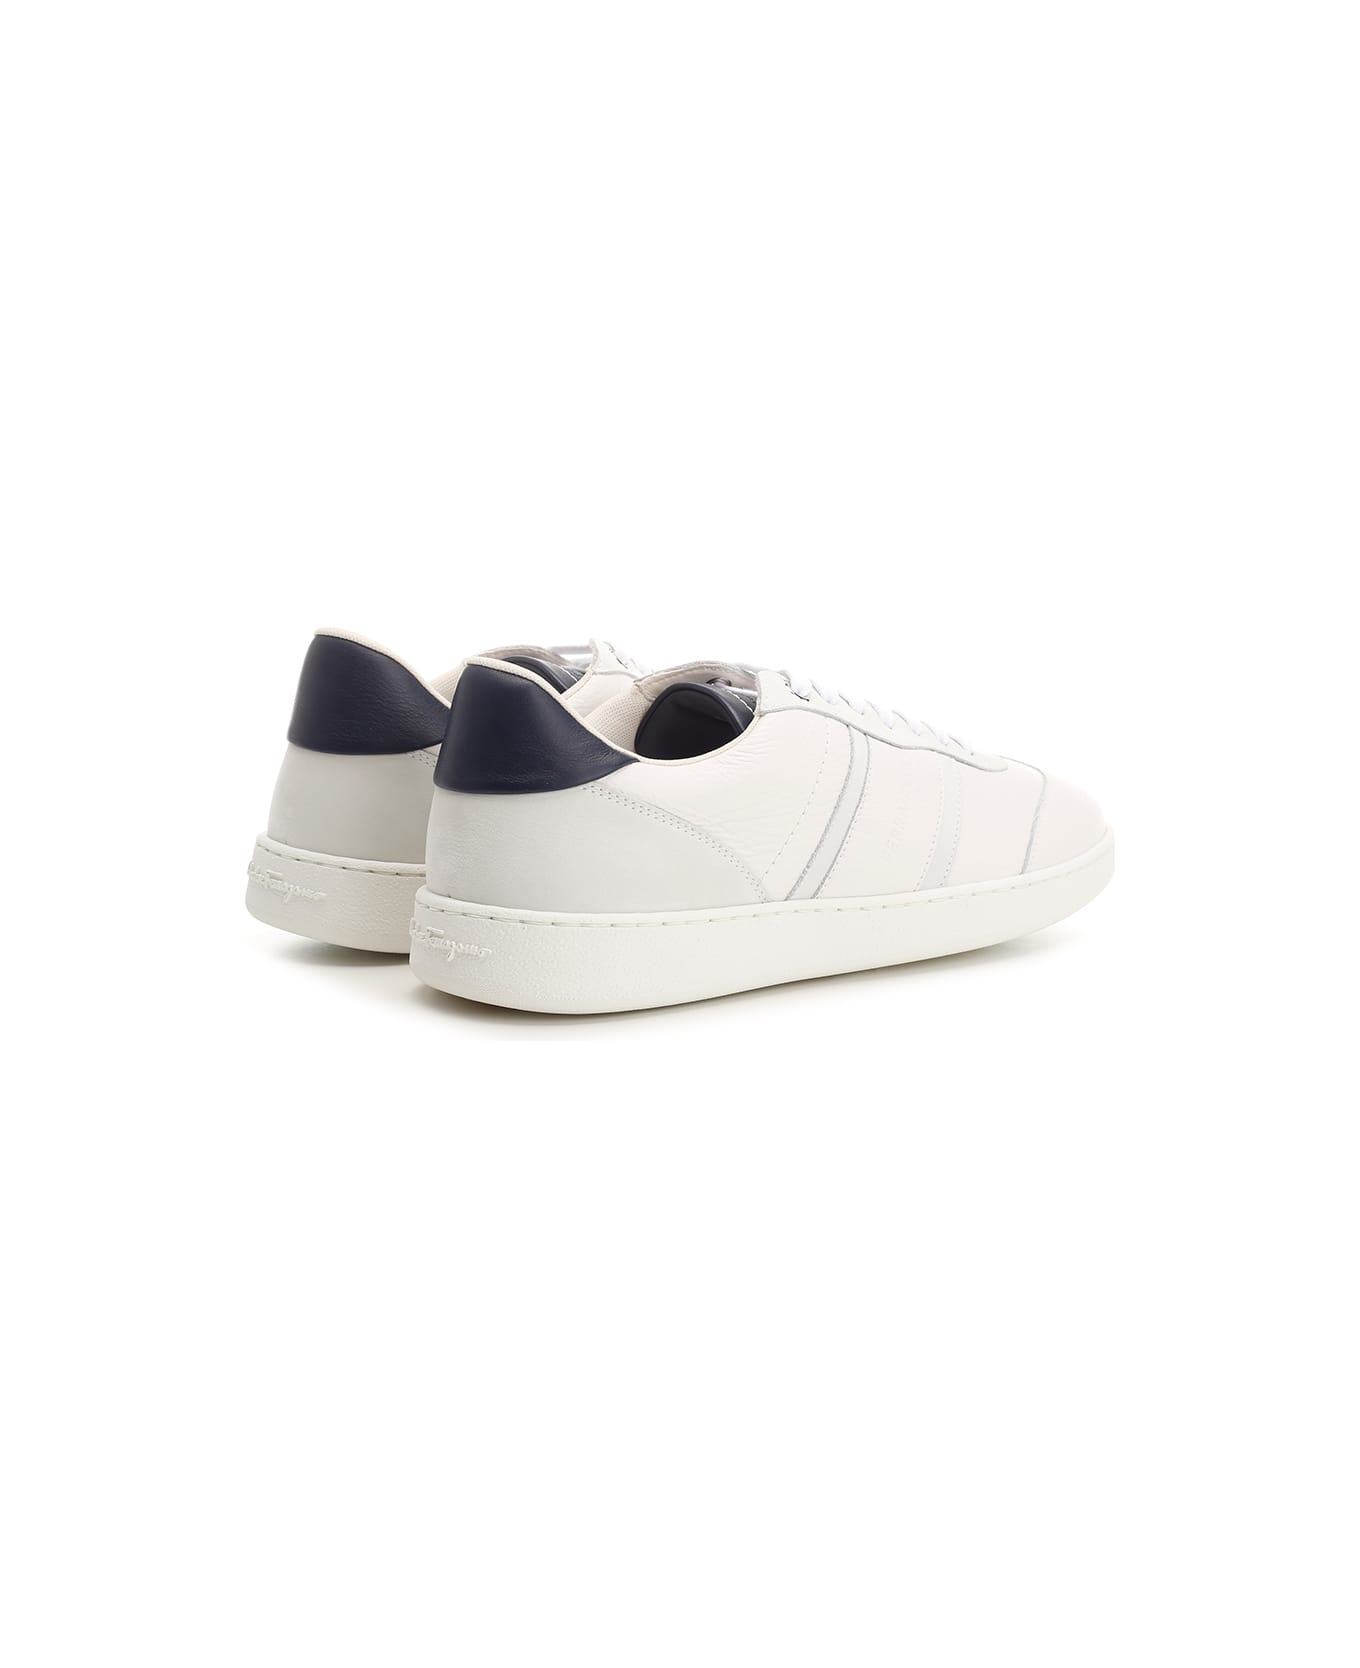 Ferragamo White Sneakers With Blue Heel Tab - WHITE